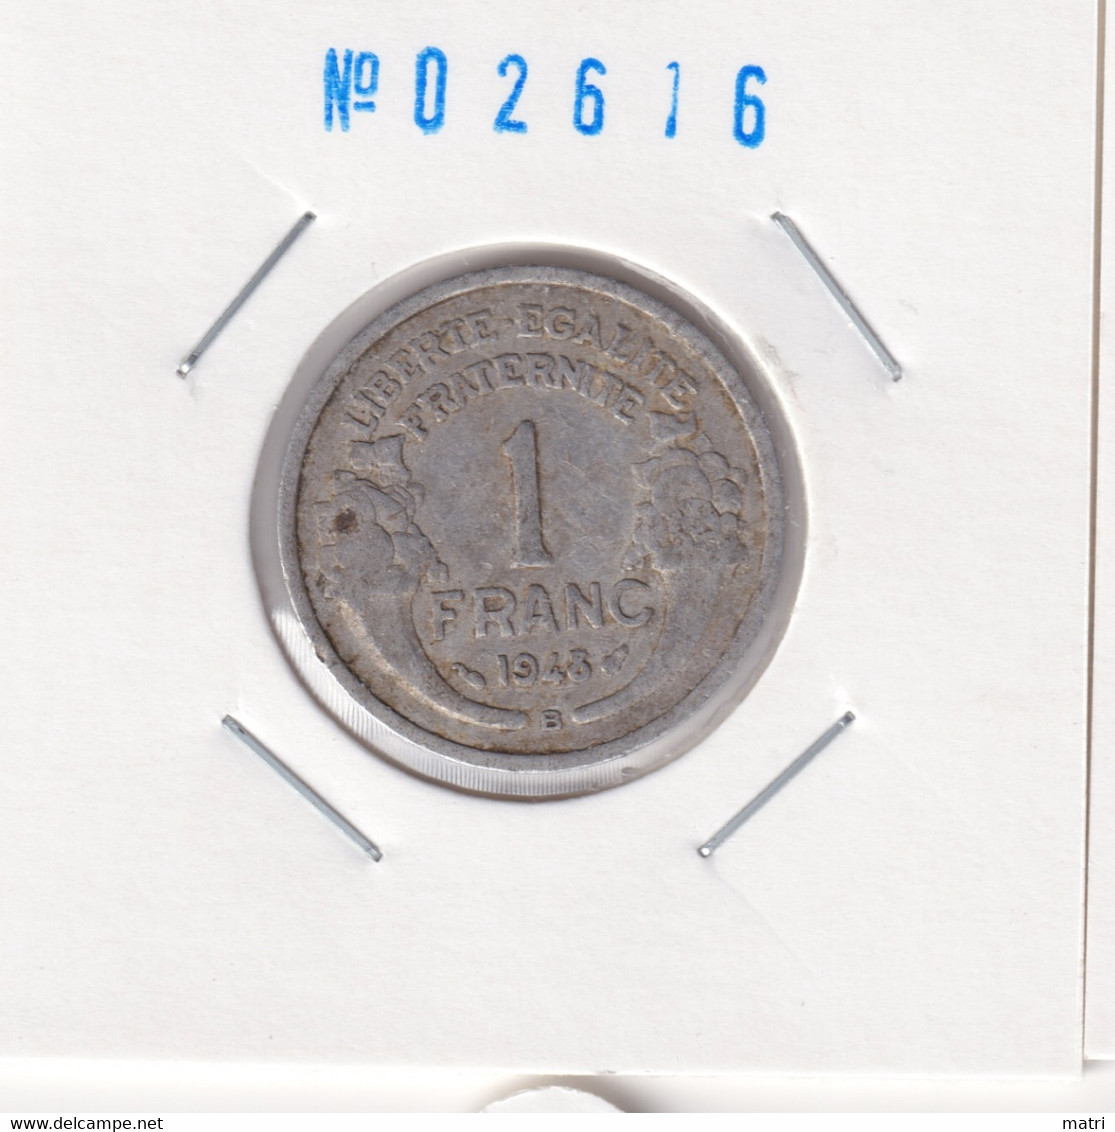 France 1 Franc 1948 B Km#885.a2 - 1 Franc